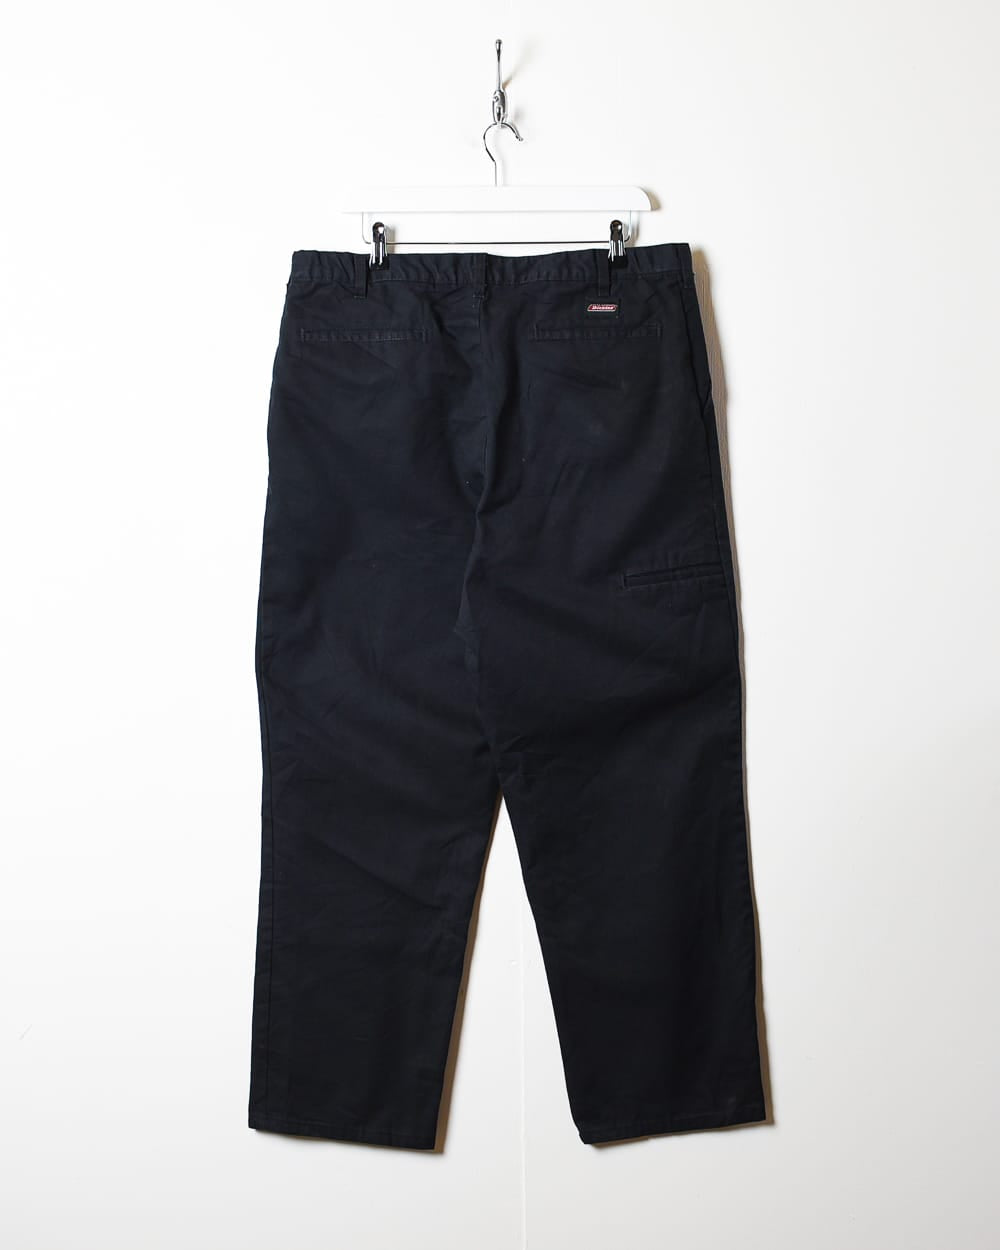 Black Dickies Trousers - W39 L29